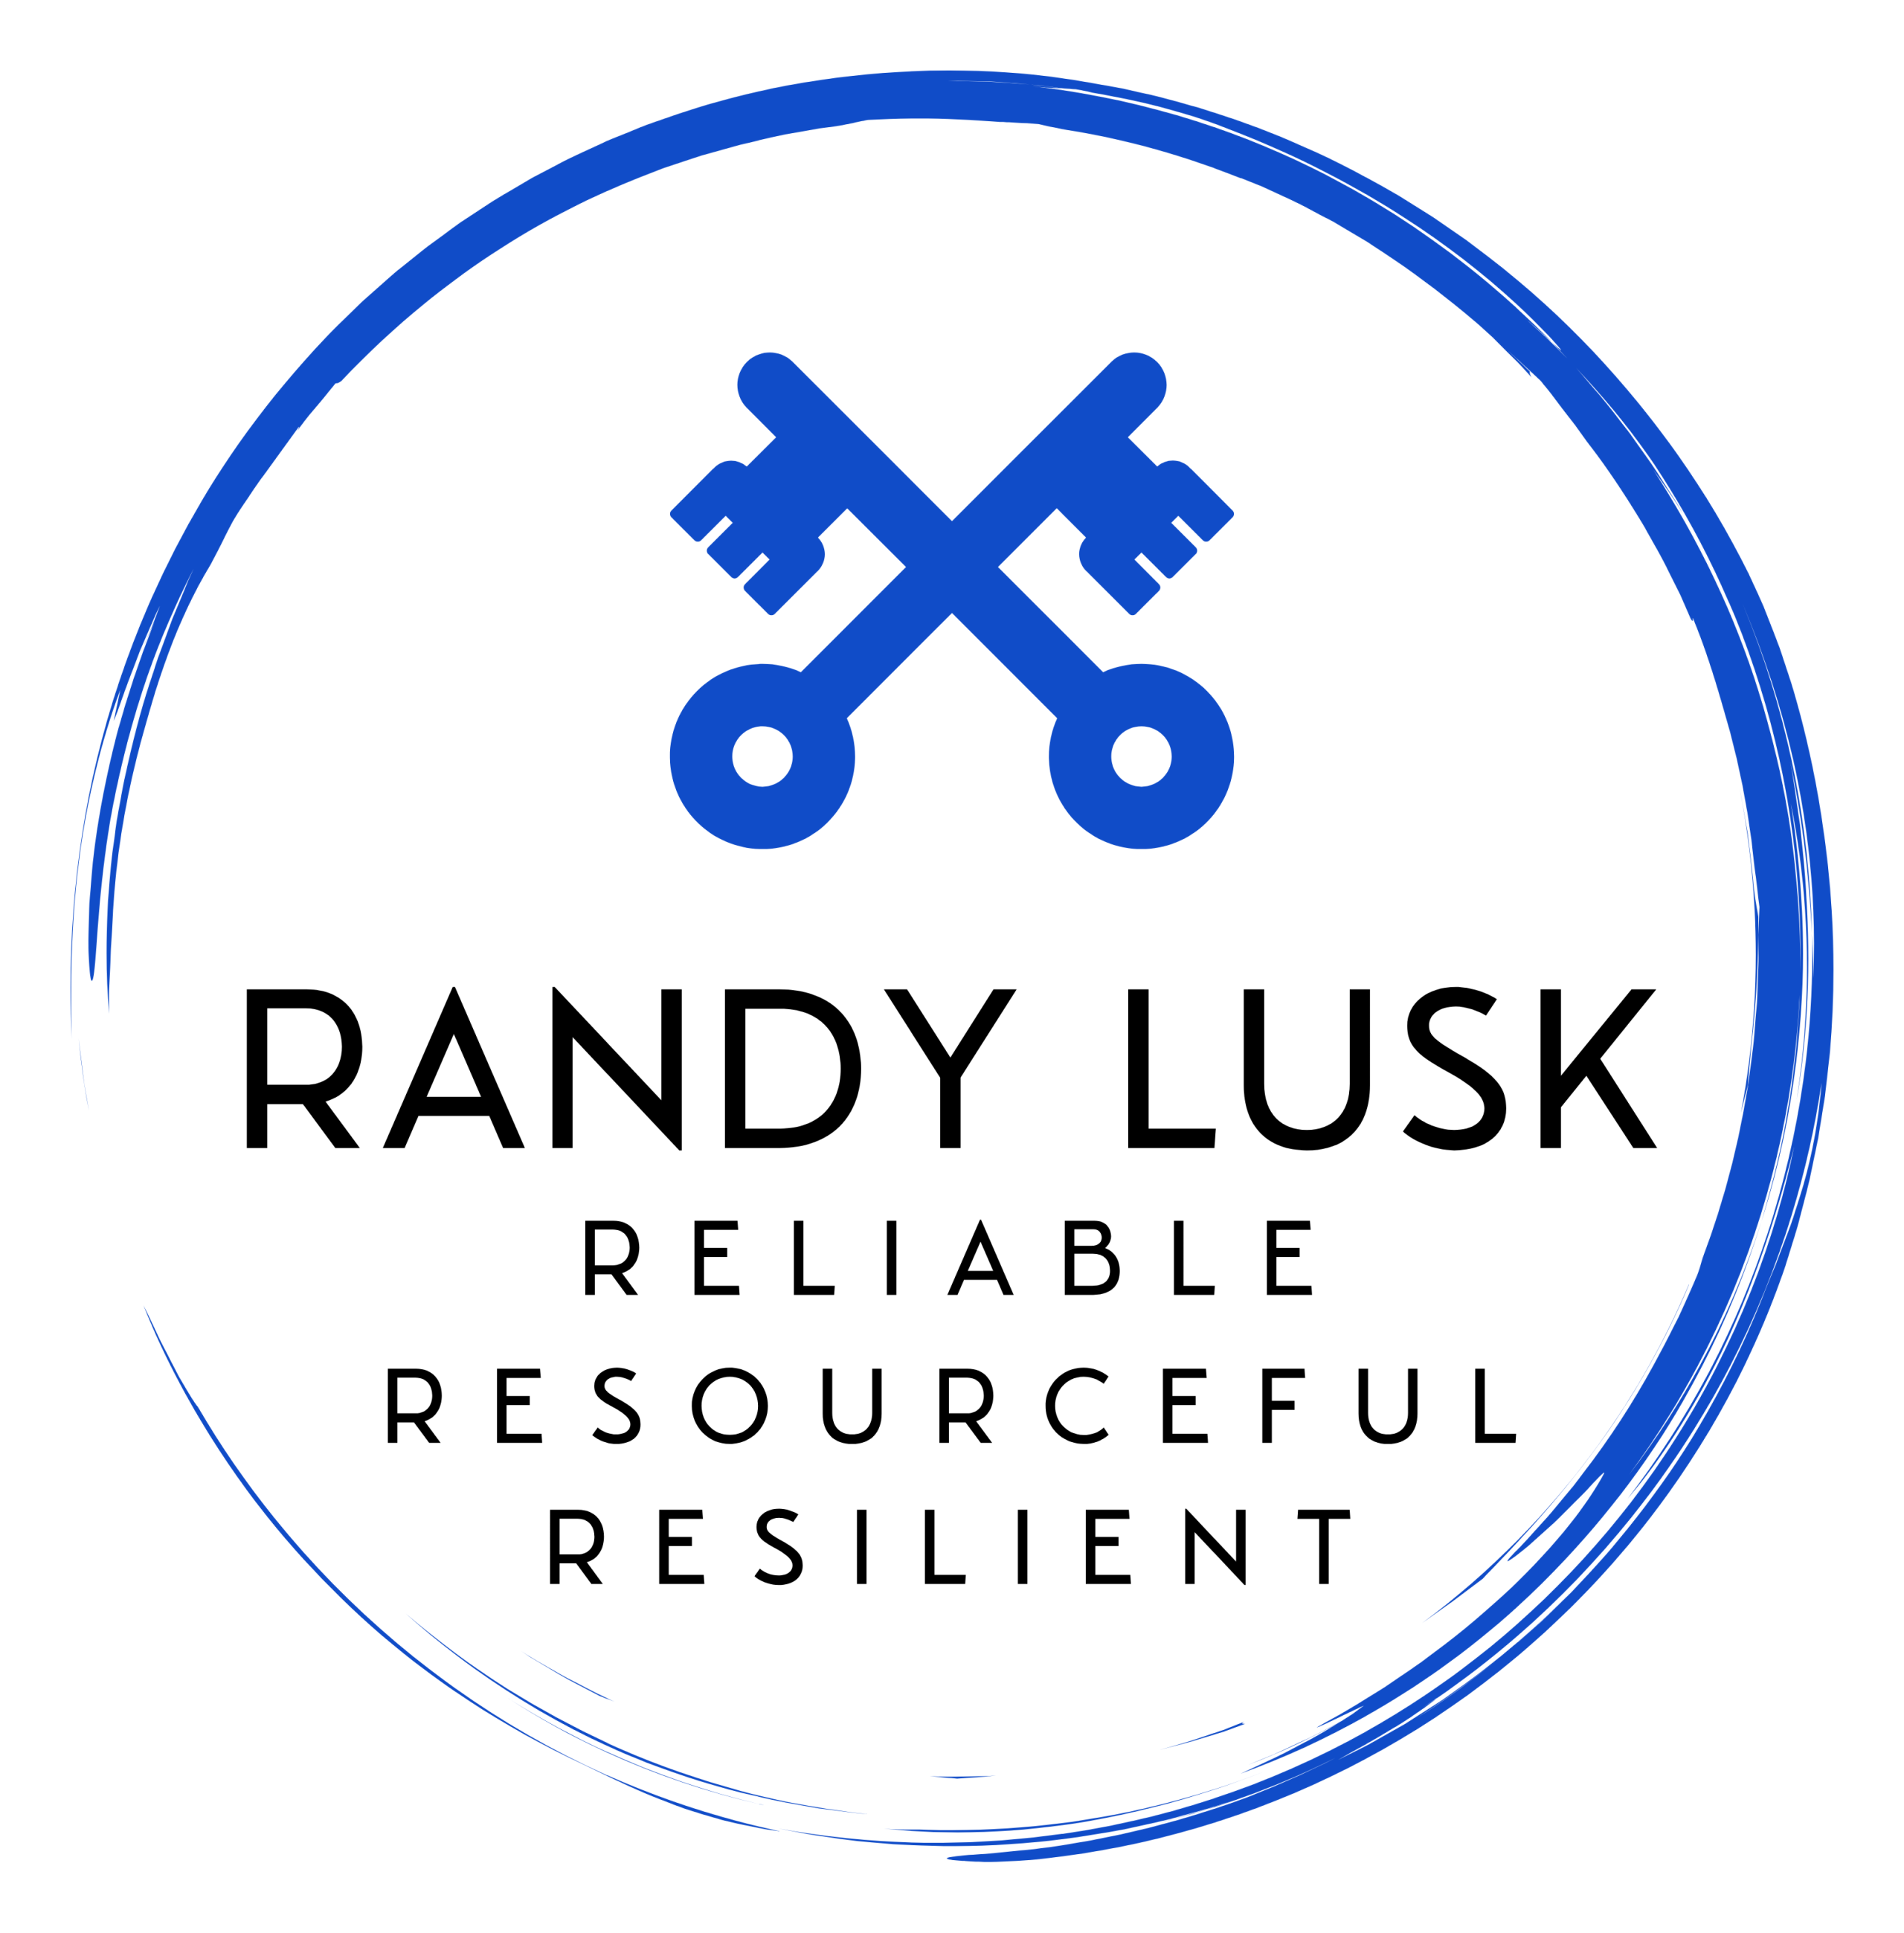 Randy Lusk